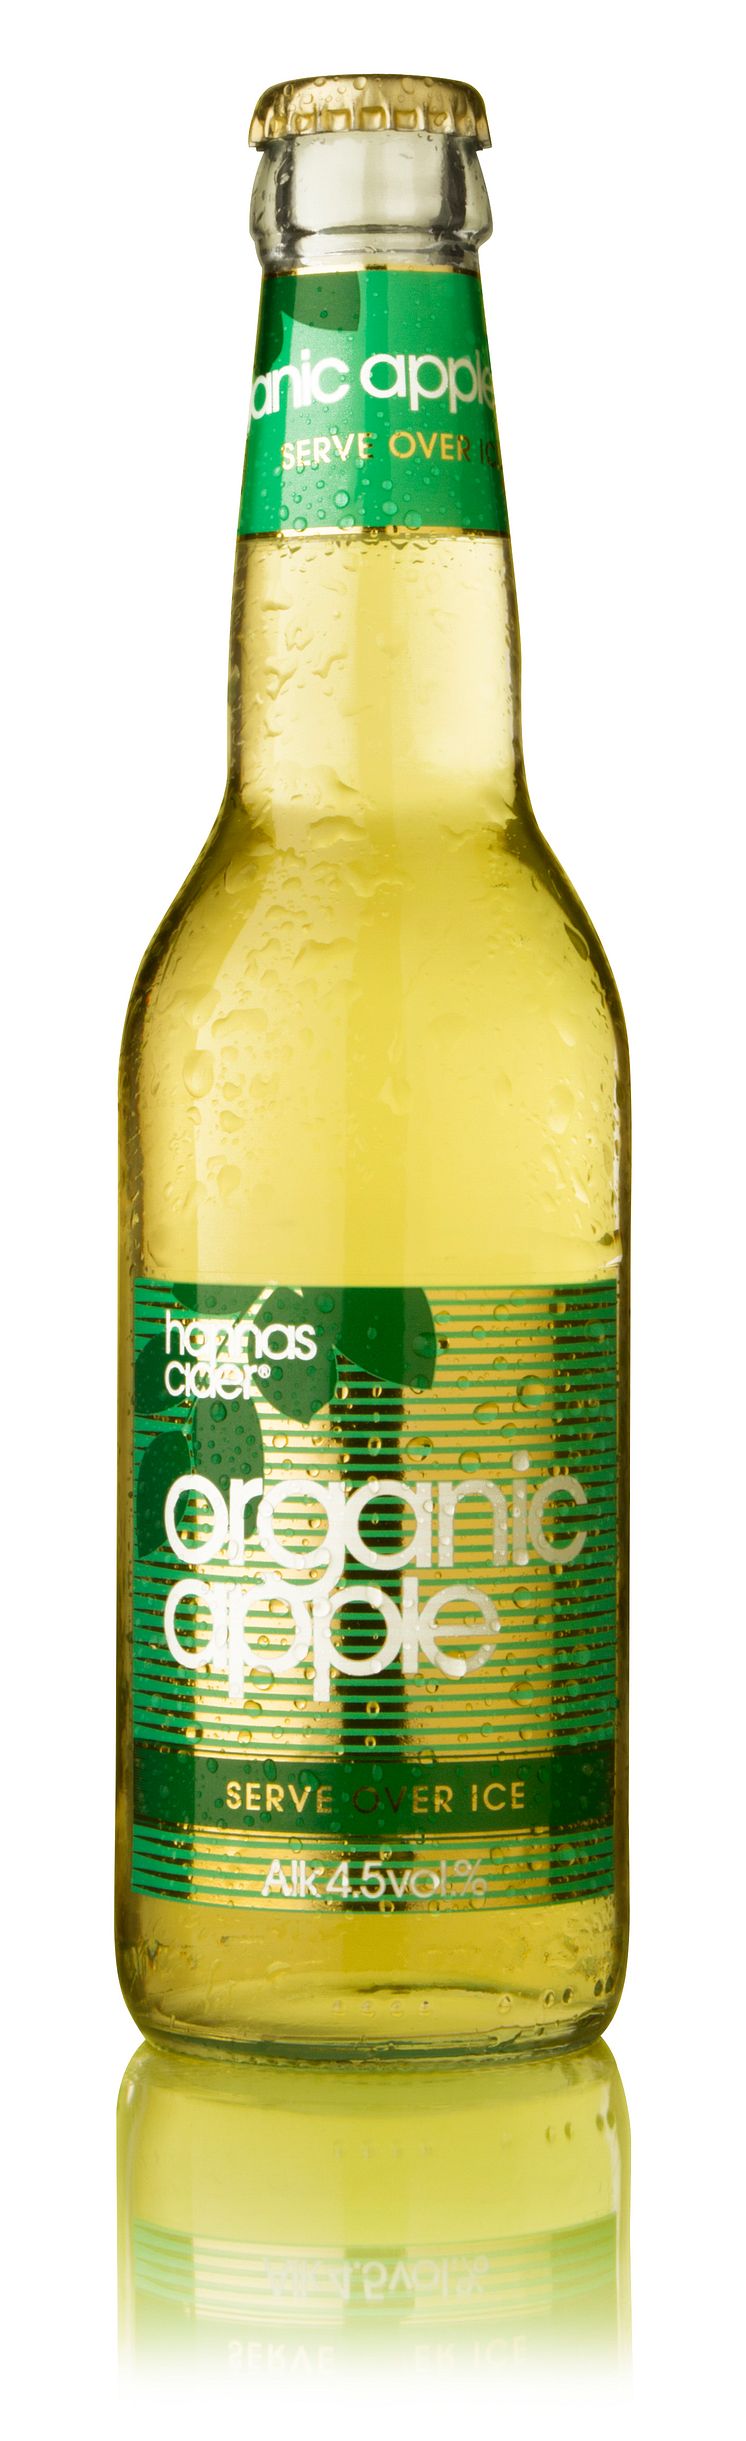 Hannas Organic Apple Cider – ny ekologisk cider på Systembolaget